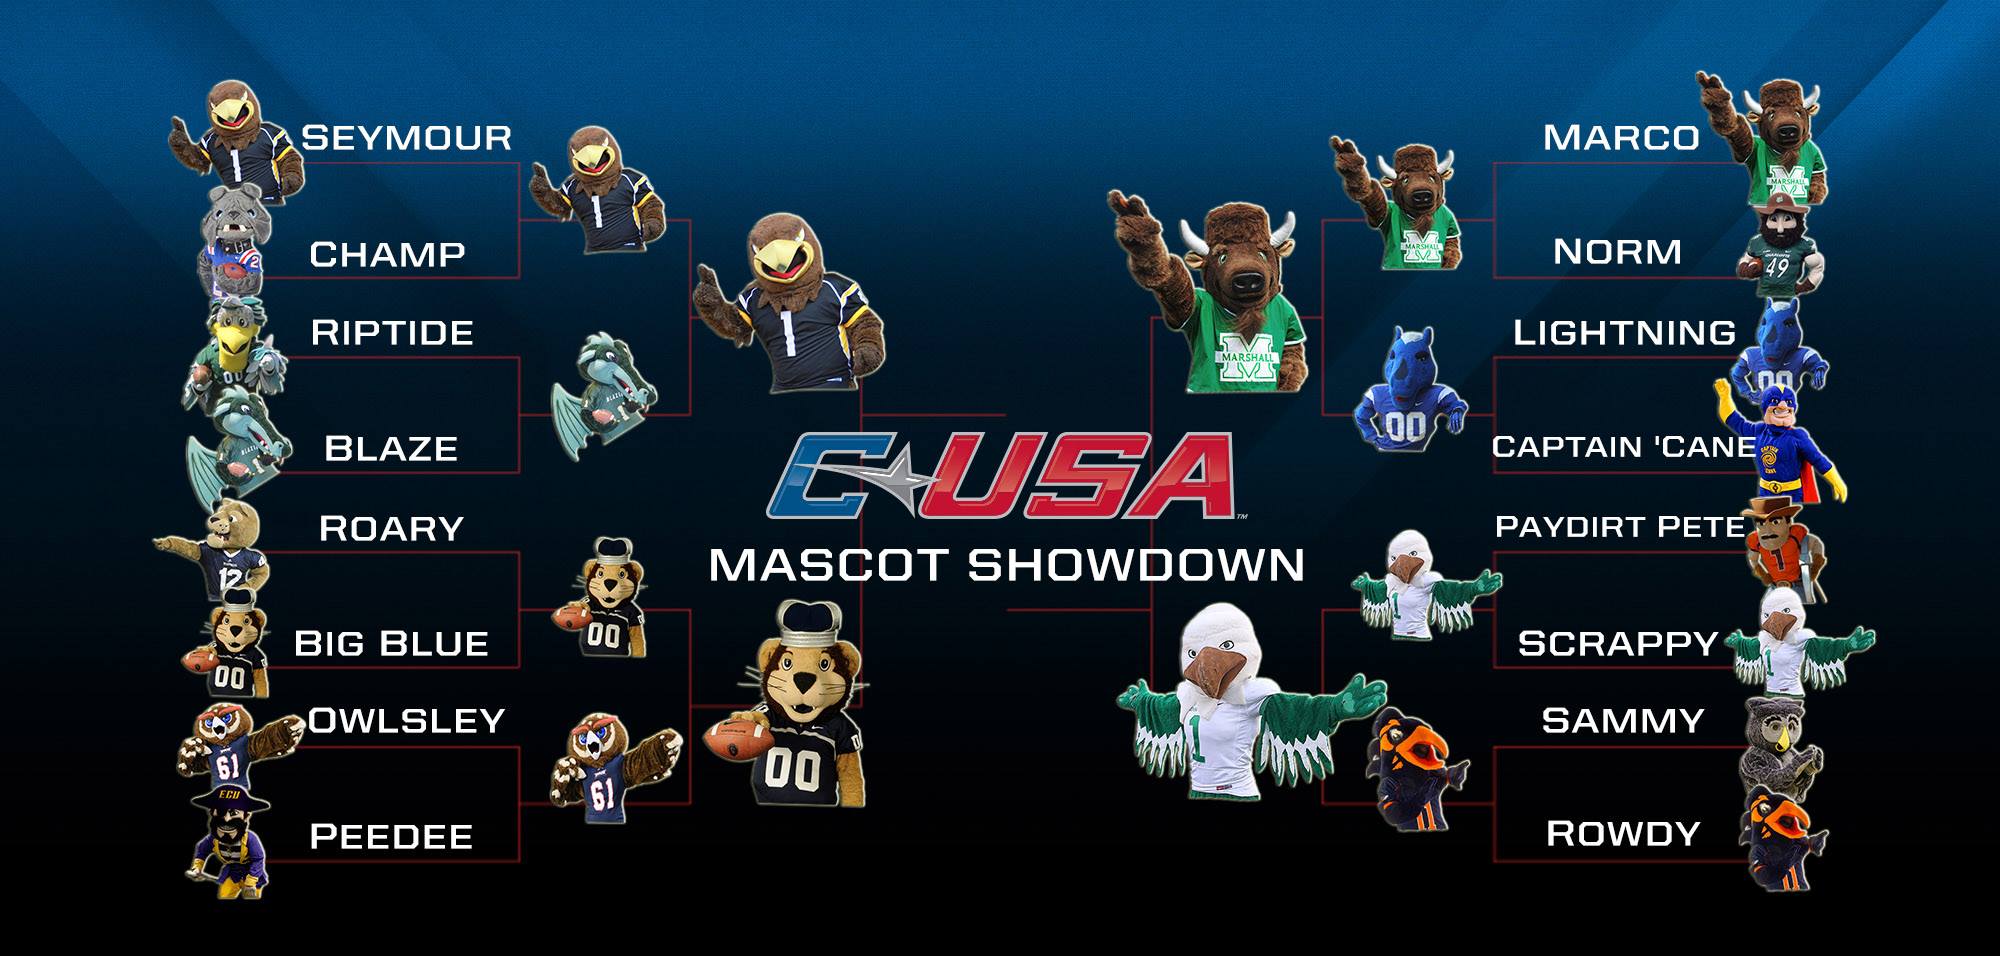 Photo of CUSA Mascot Showdown bracket